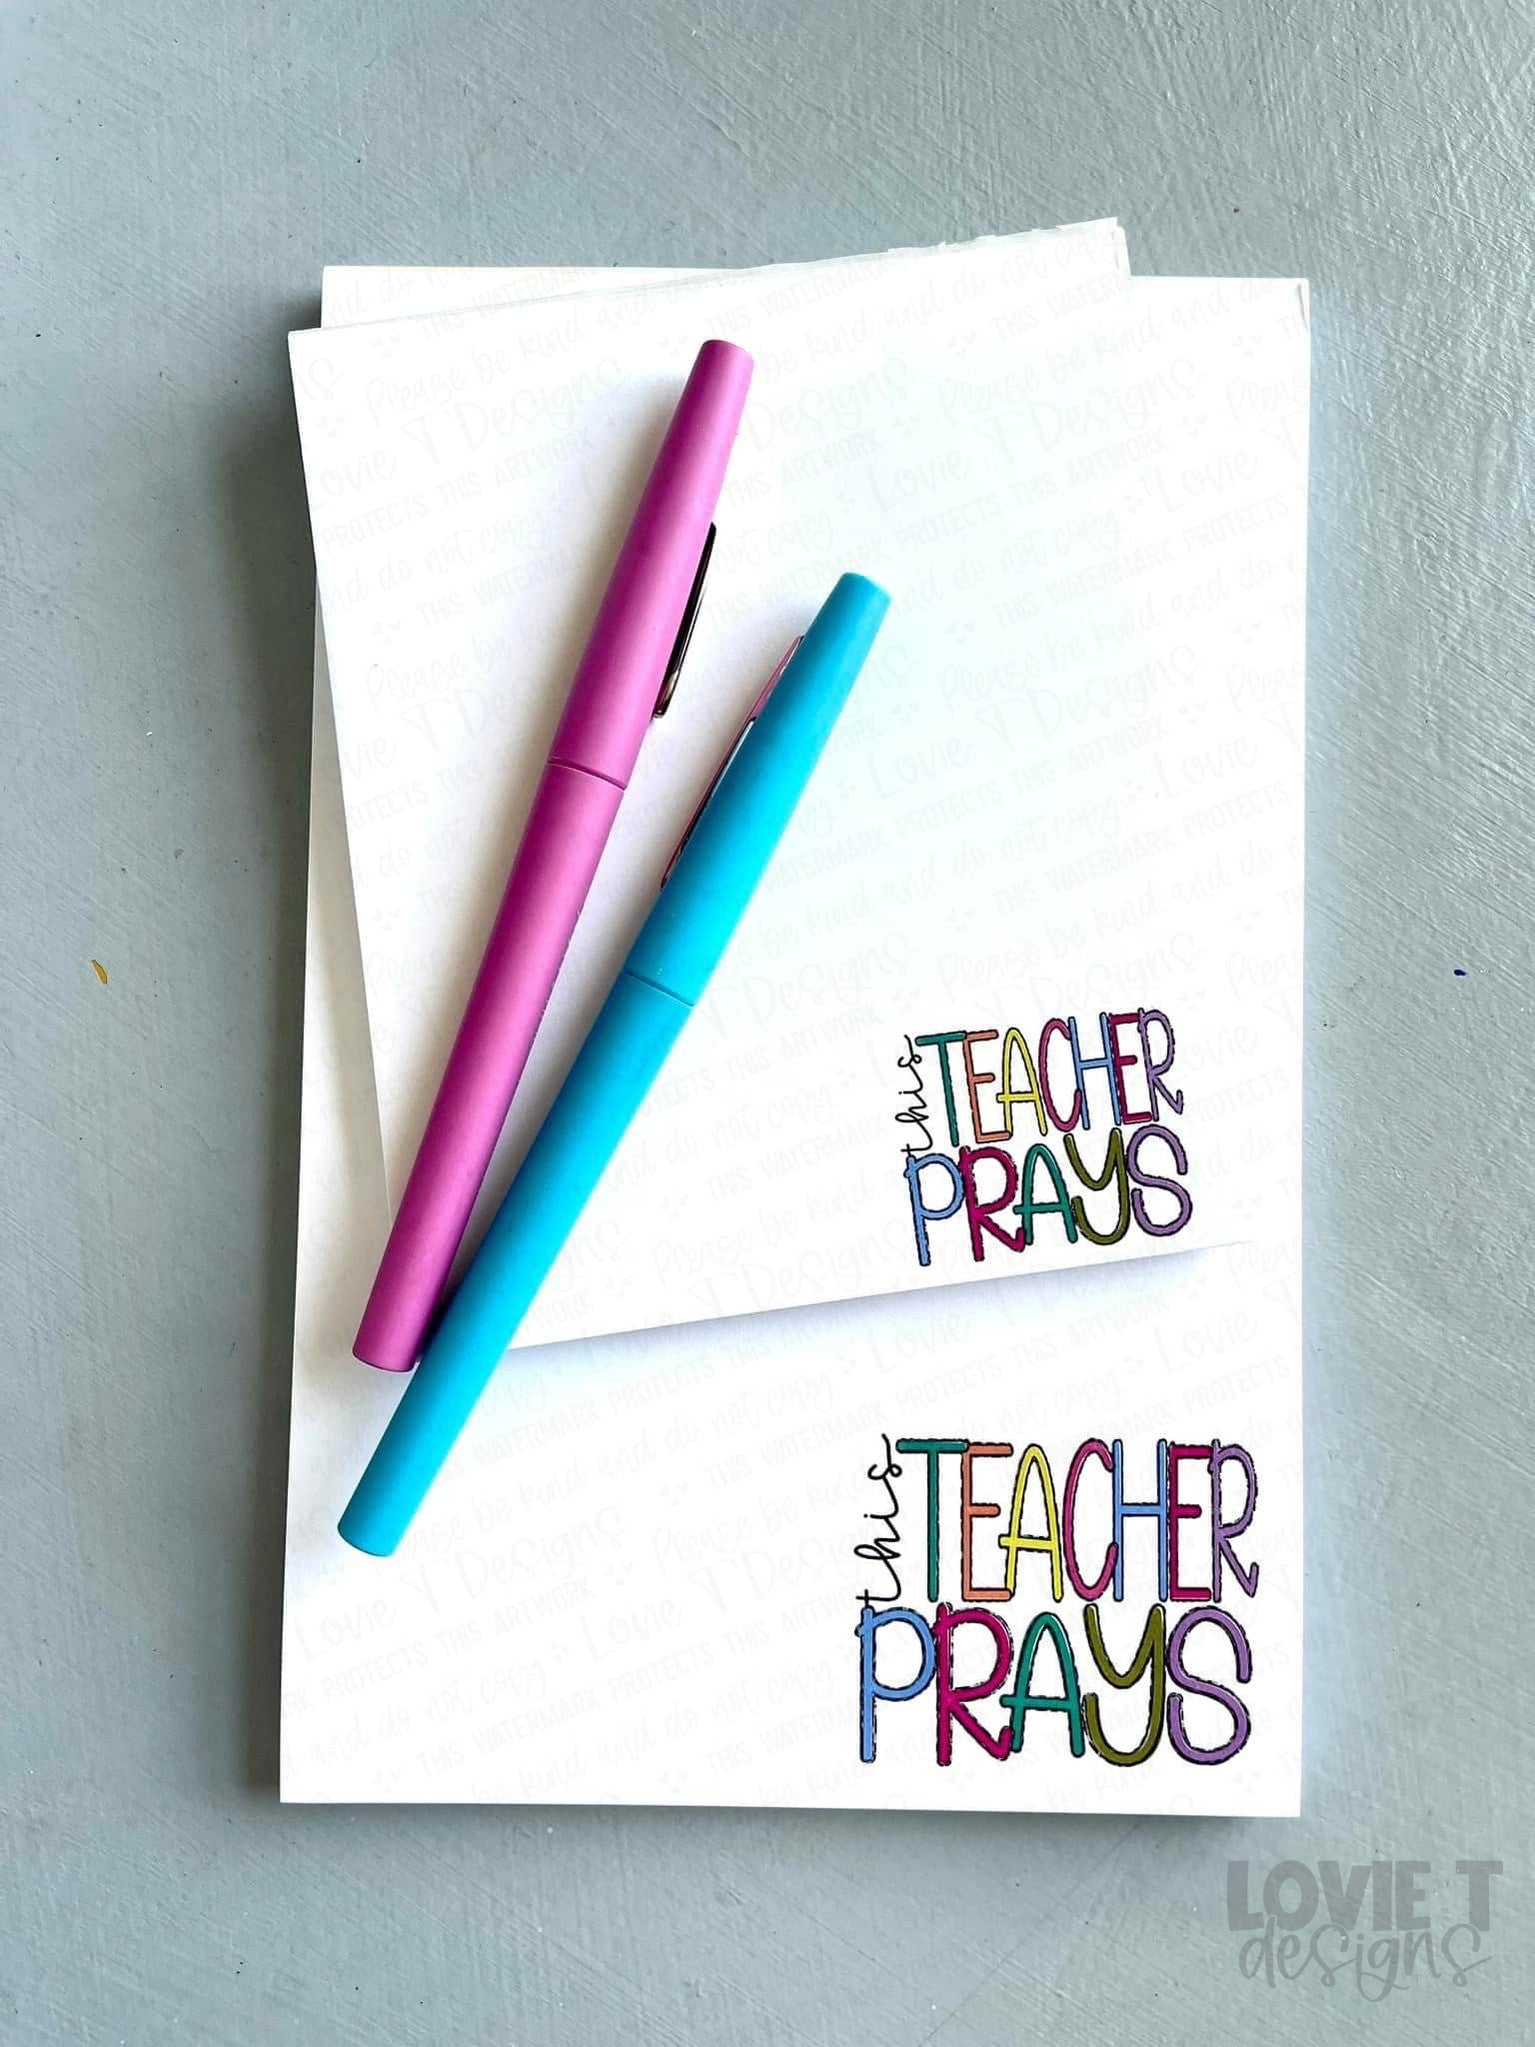 This Teacher Prays